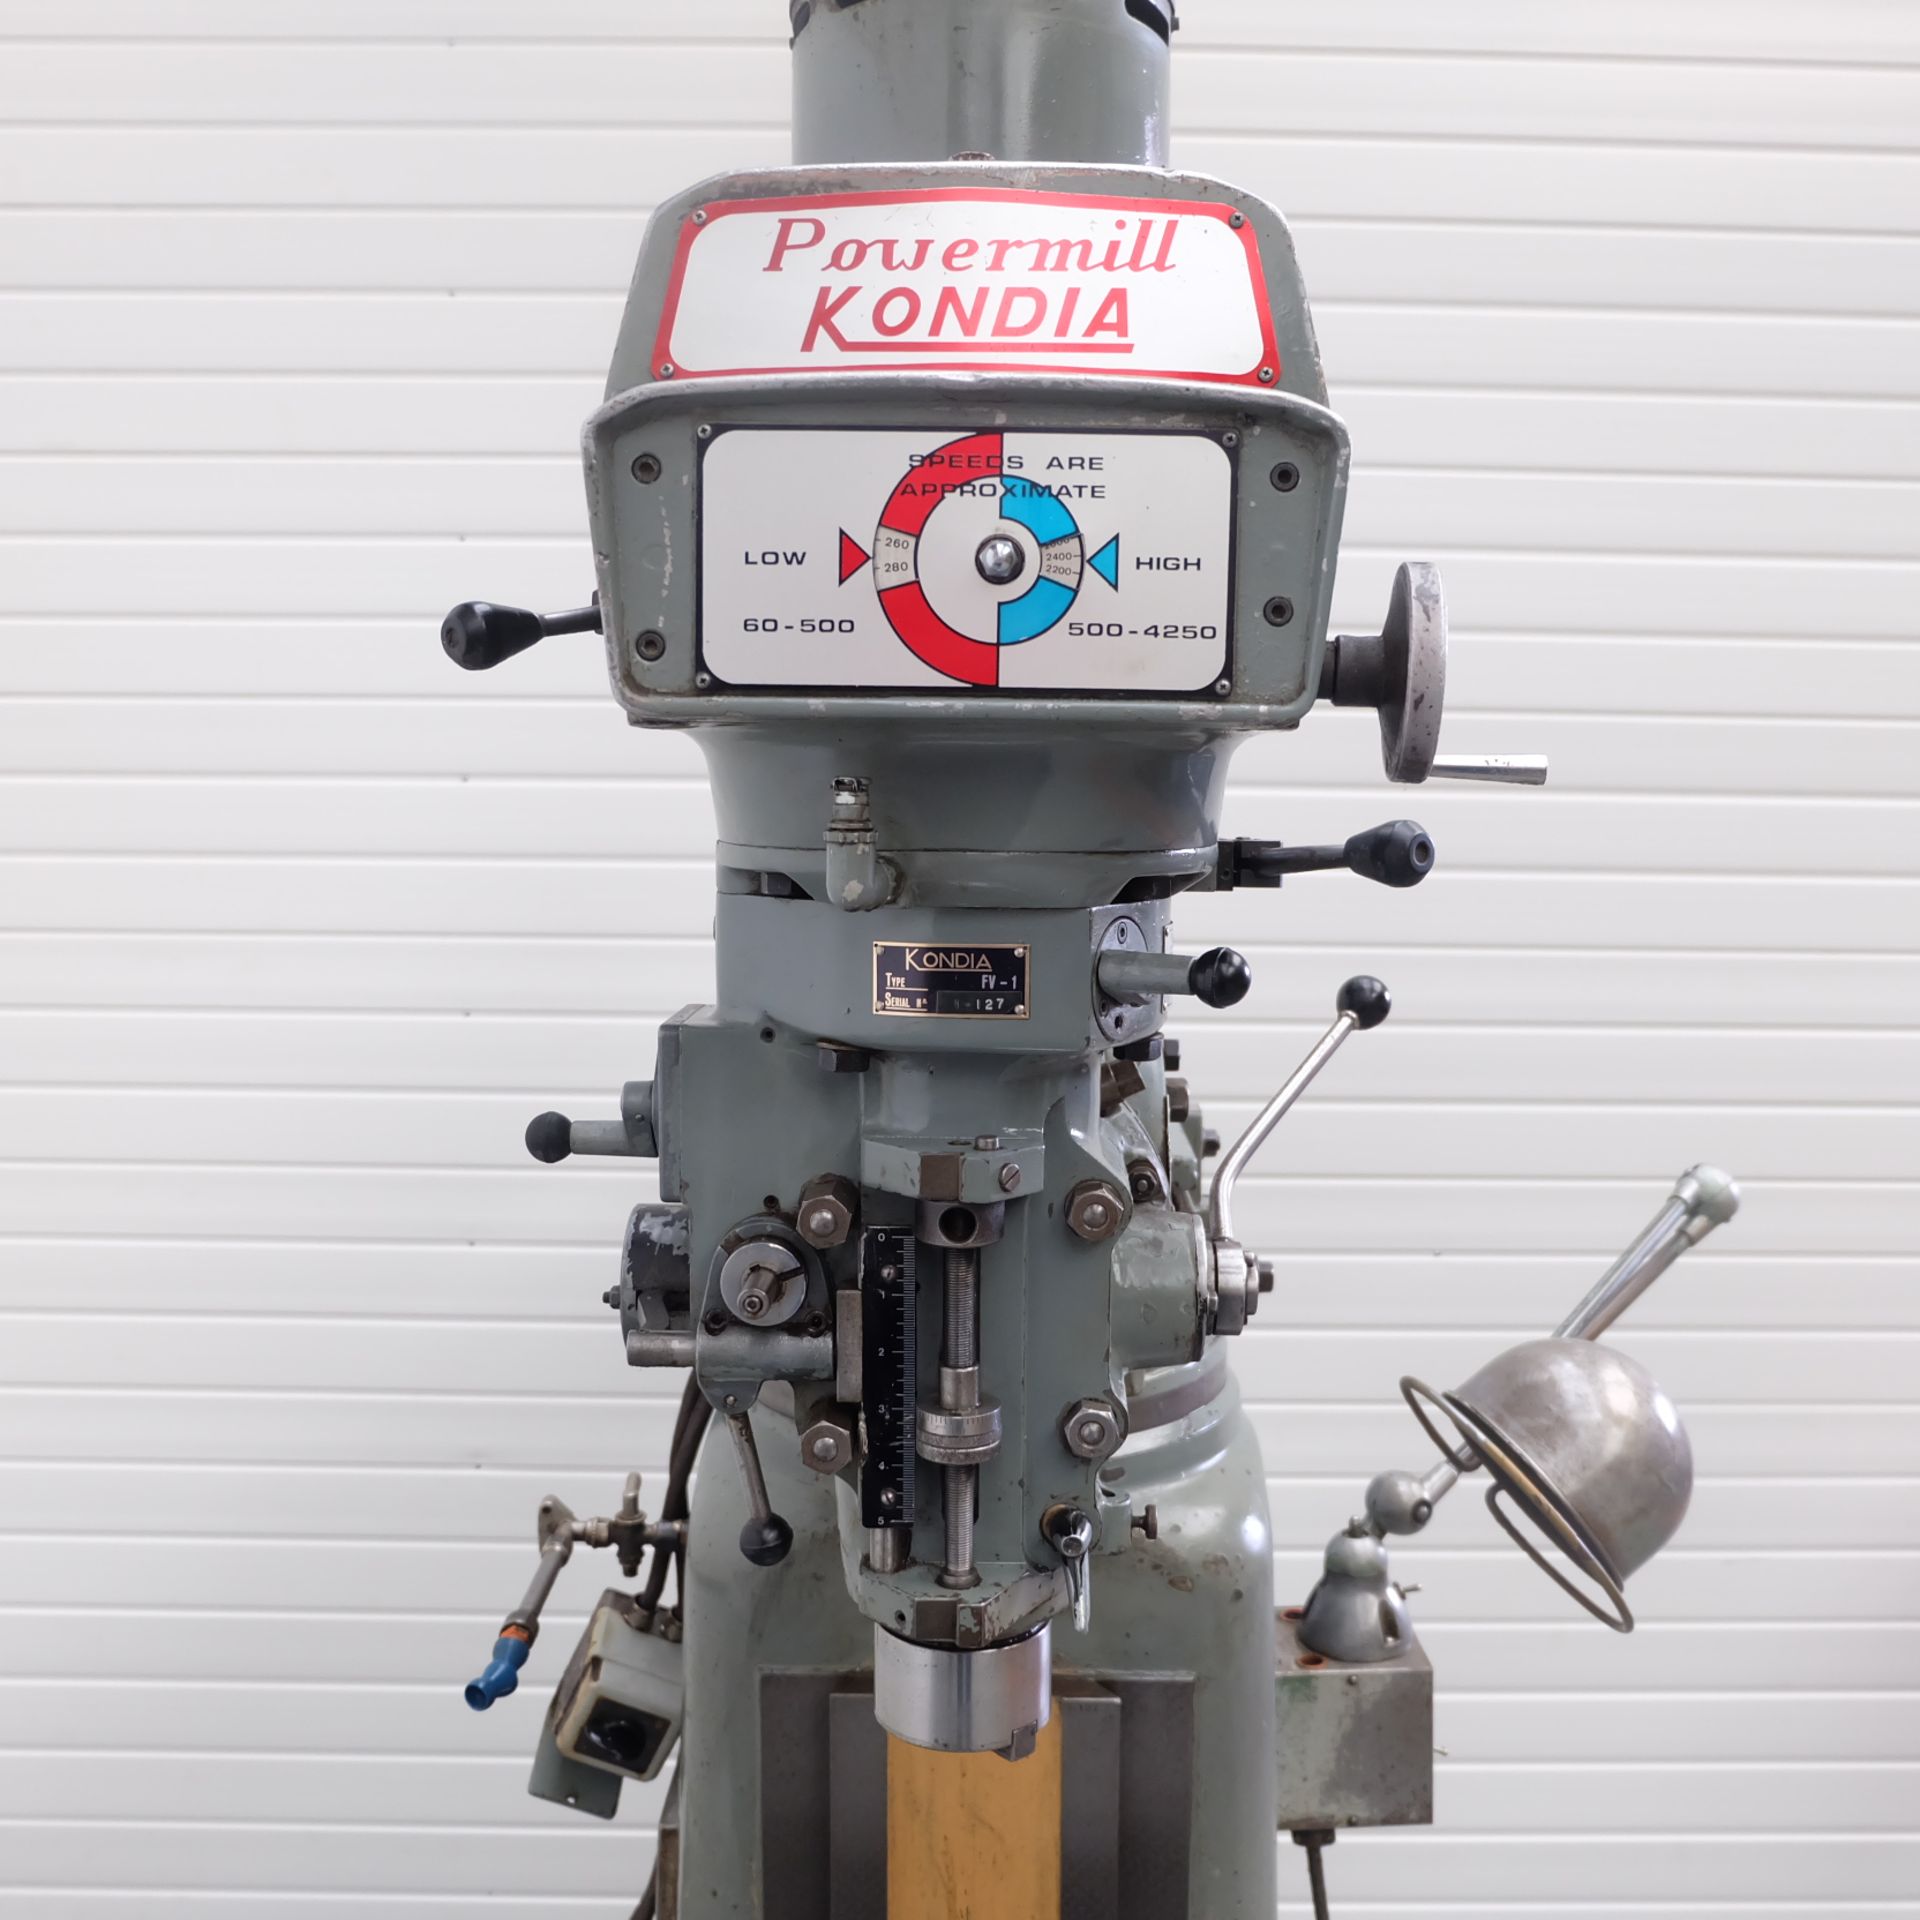 Kondia Type FV-1 Powermill Vari-Speed Head Turret Milling Machine. - Image 4 of 12